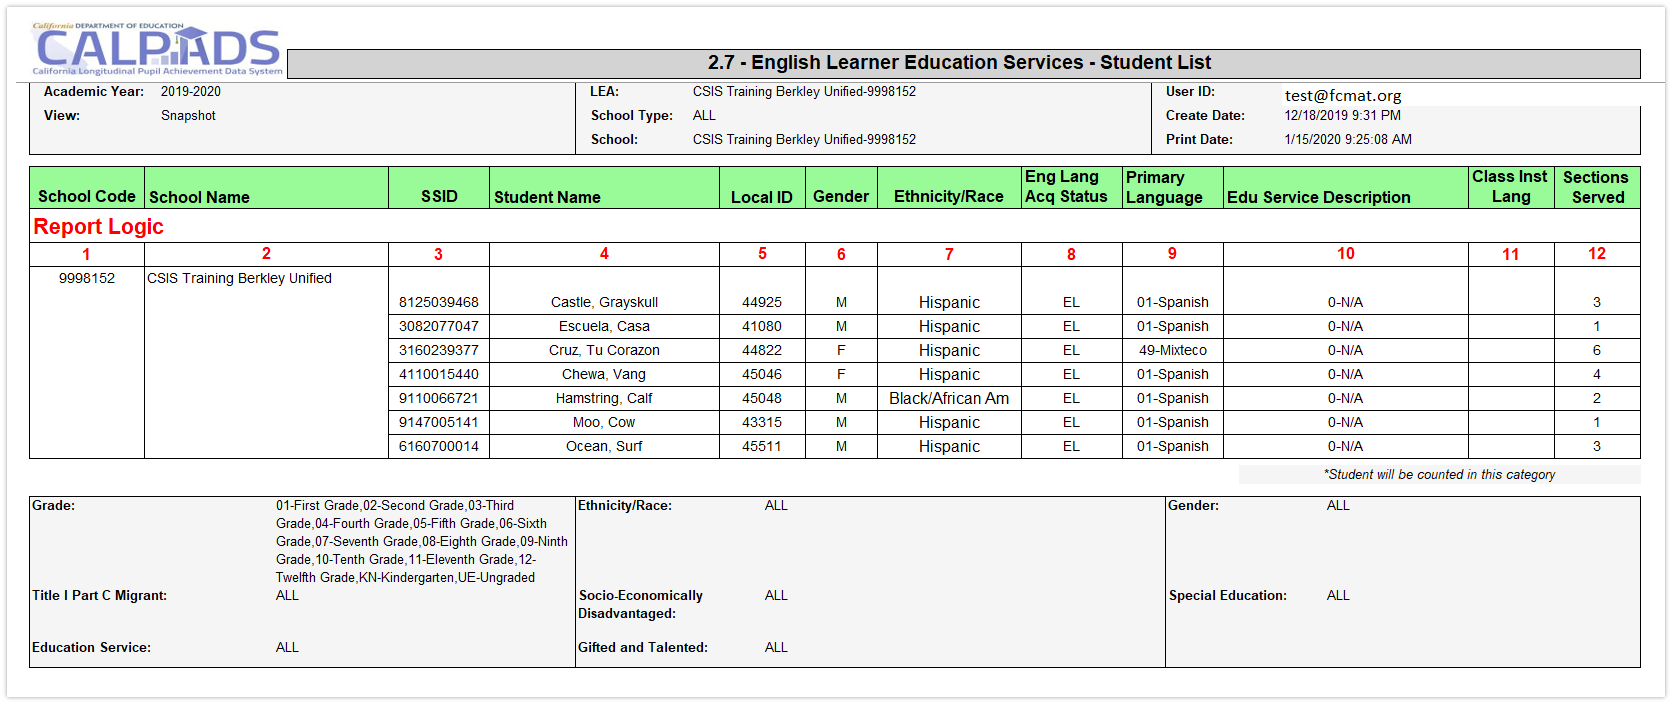 Report 2.7: English Learner Education Services - Student List Description